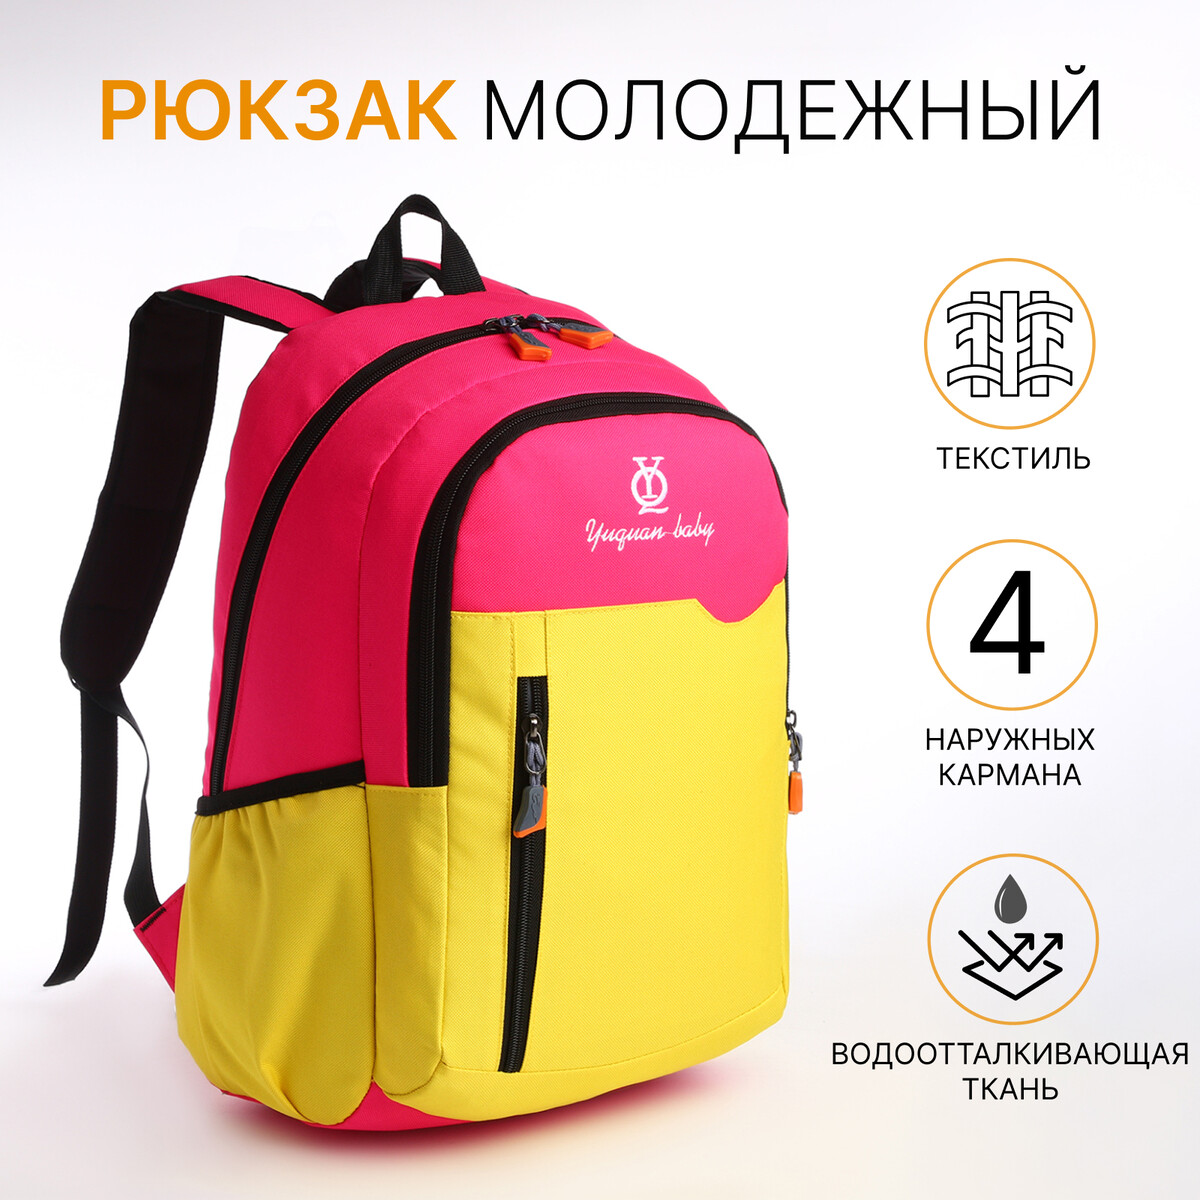 Рюкзак школьный, 2 отдела на молнии, 3 кармана, цвет розовый/желтый рюкзак школьный из текстиля на молнии 2 отдела 3 кармана розовый